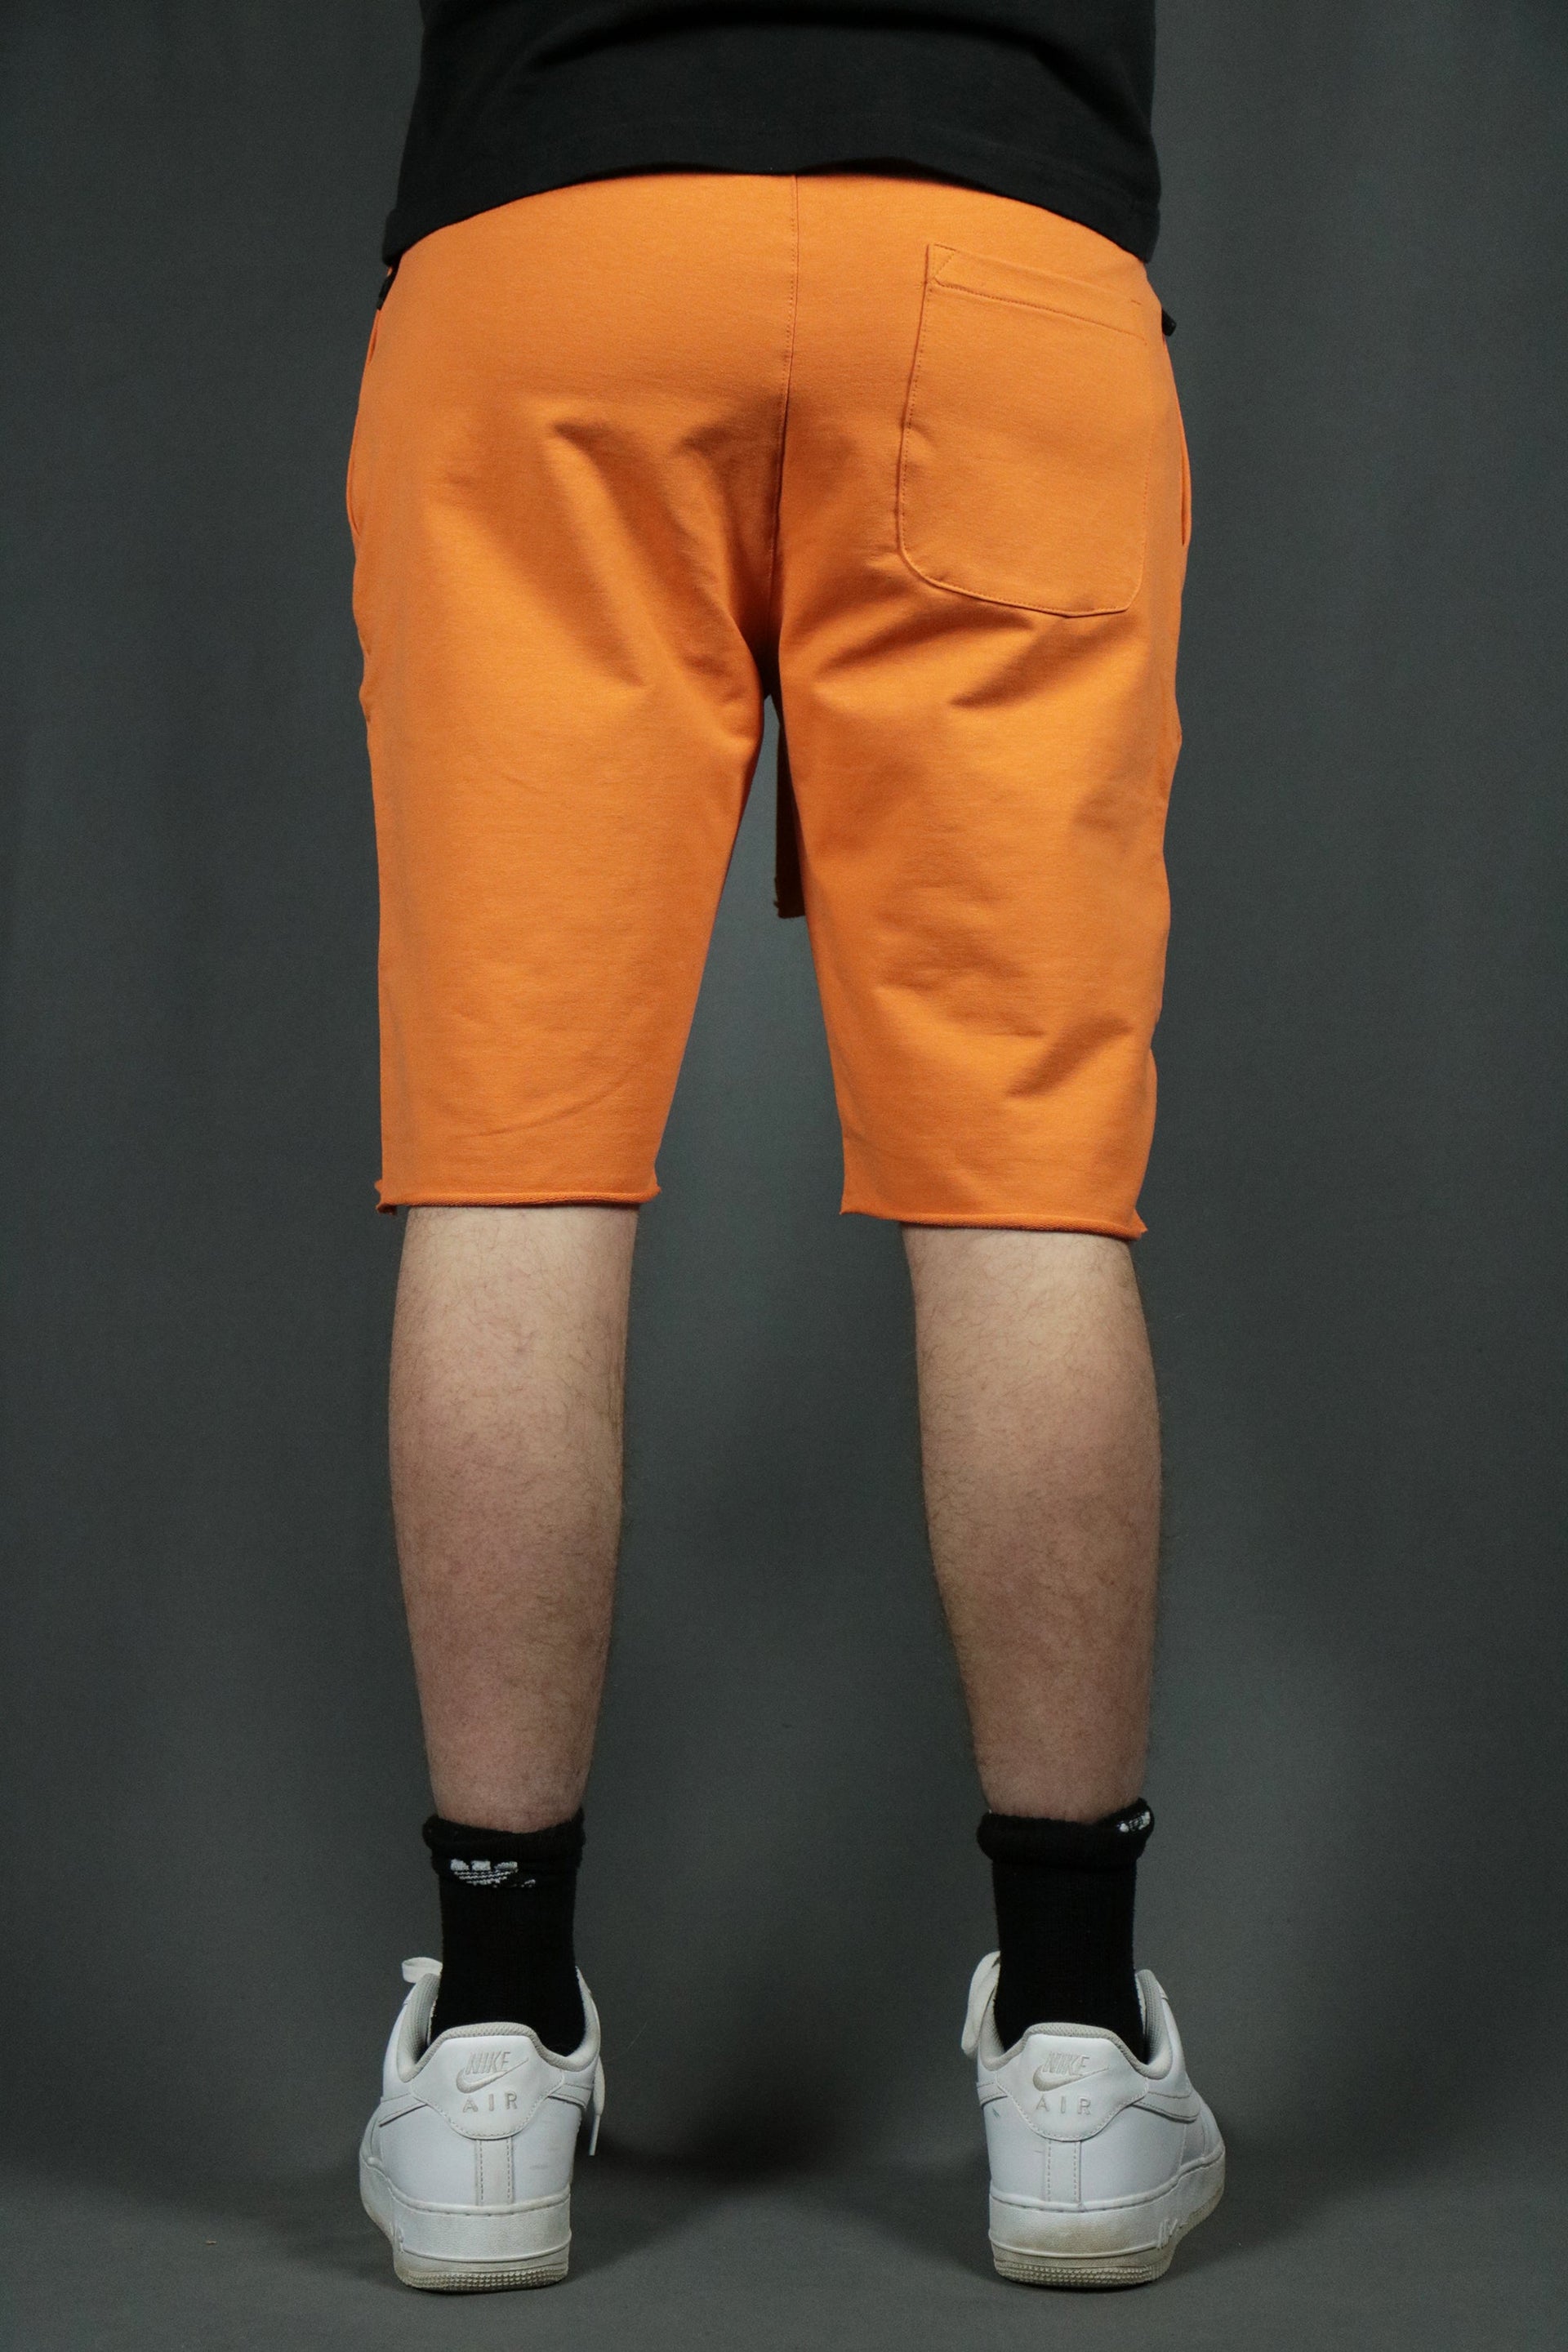 The orange Jordan Craig mens terry cloth shorts have one pocket at the back.